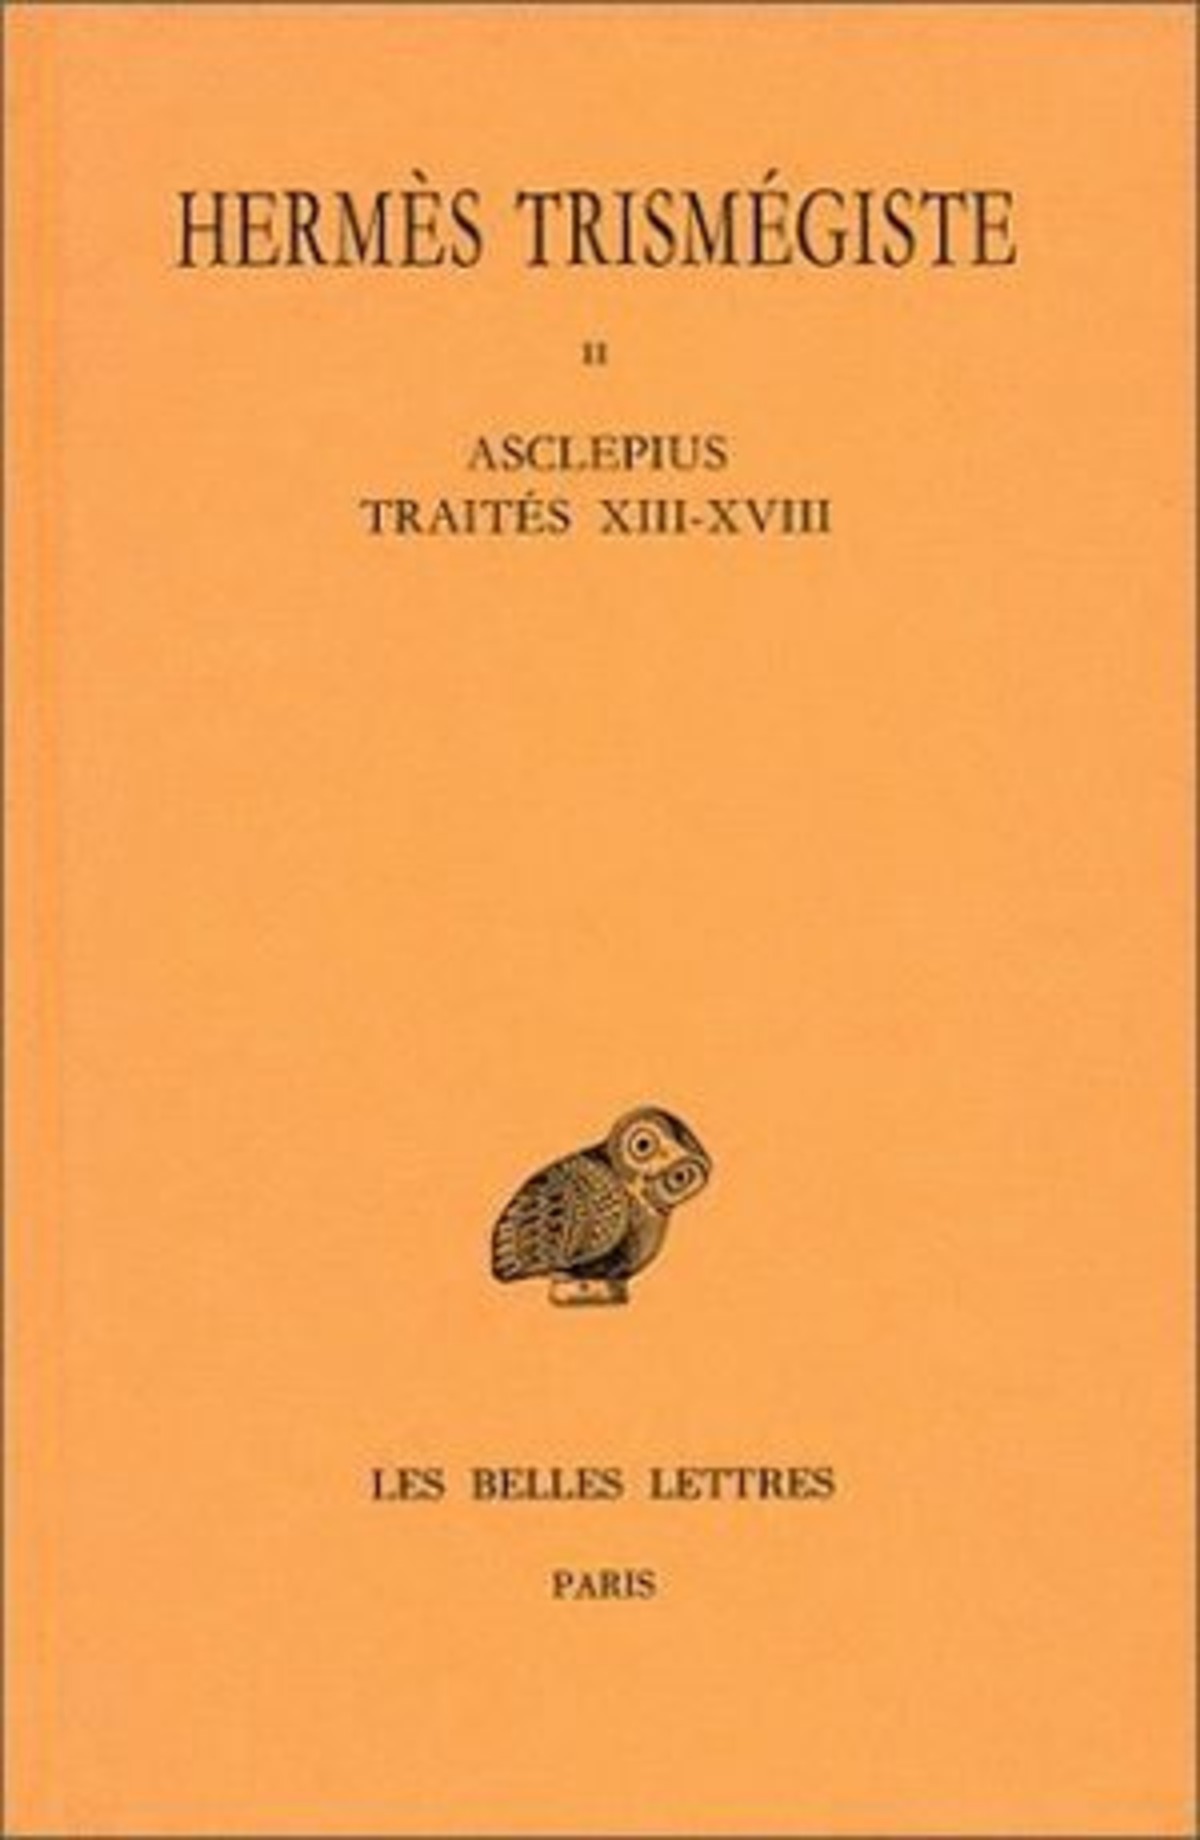 Corpus hermeticum. Tome II : Traités XIII-XVIII - Asclépius